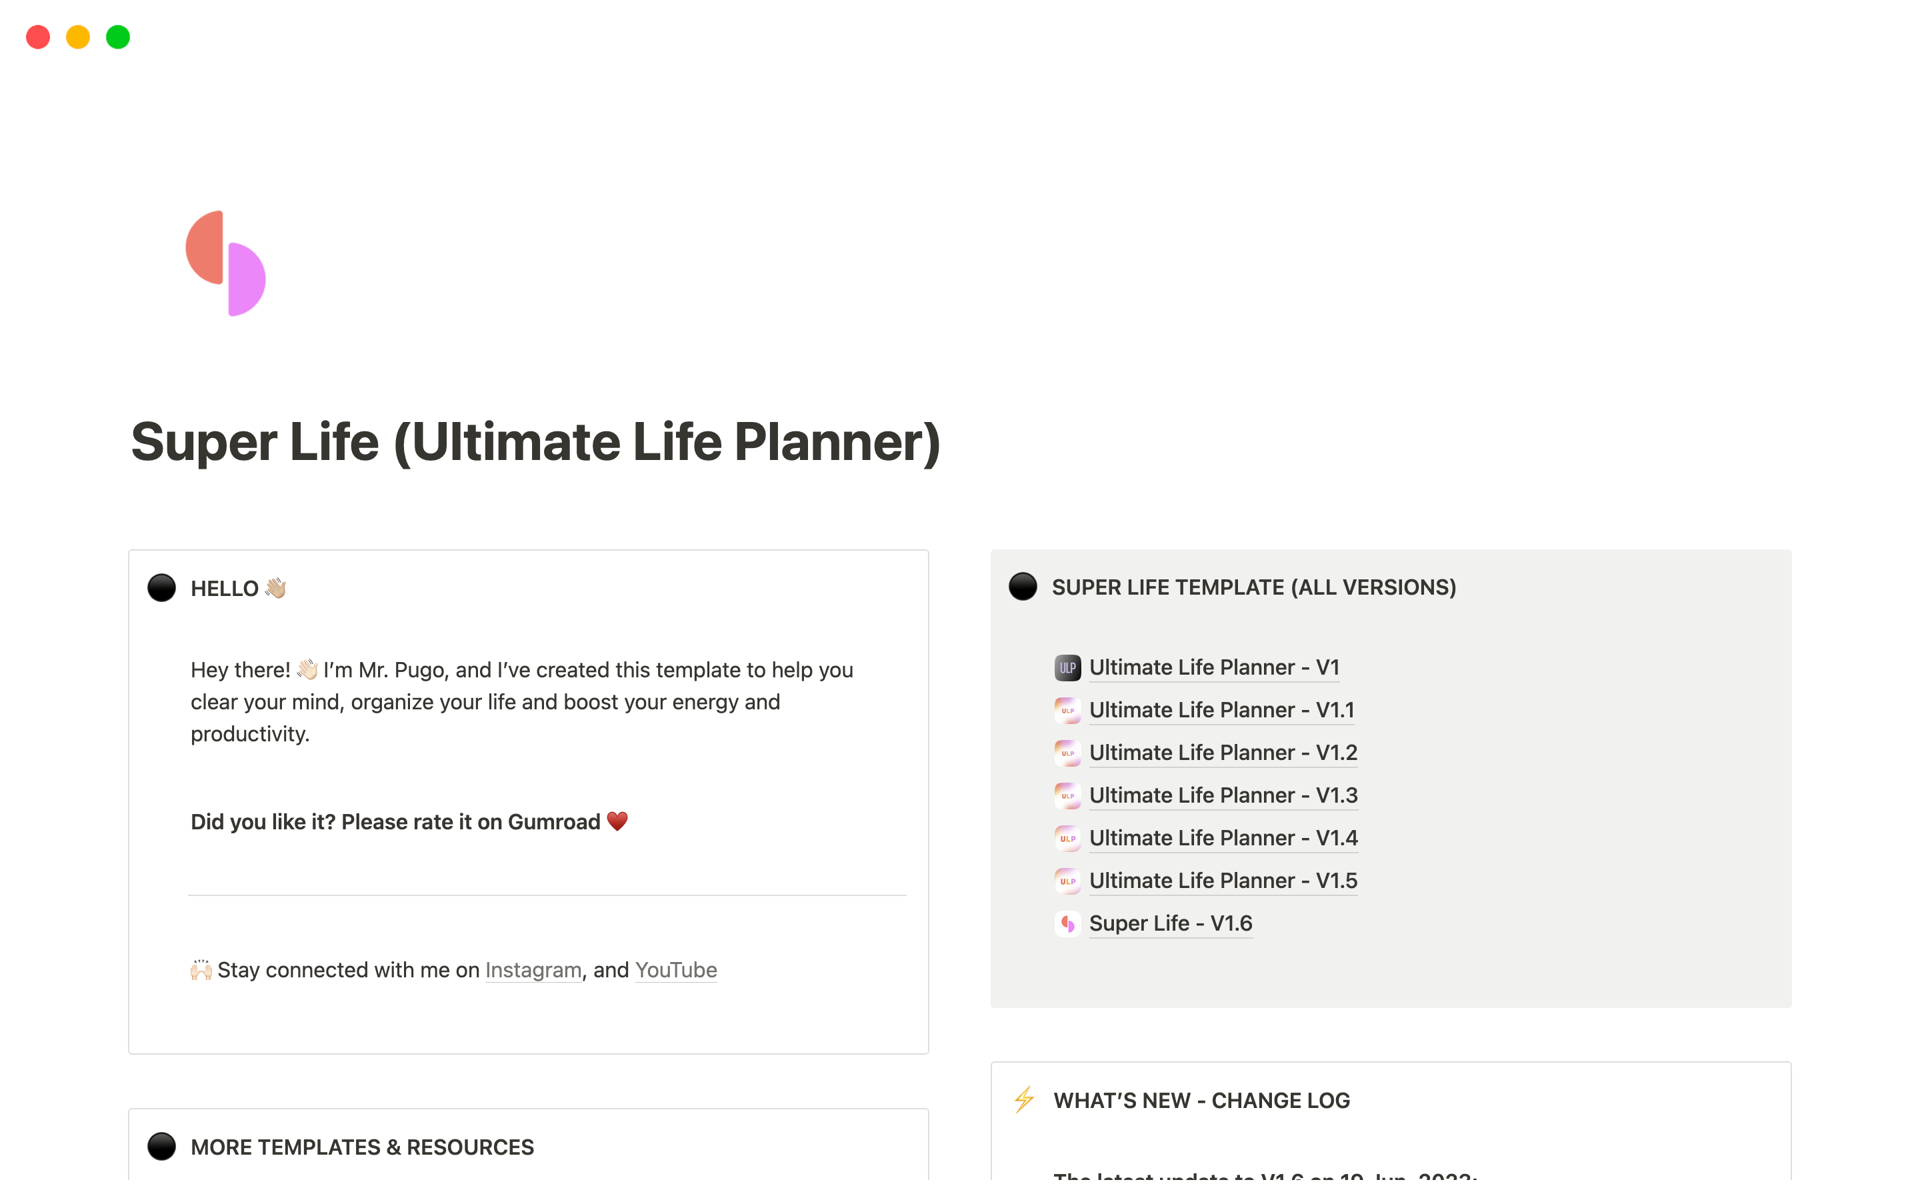 Aperçu du modèle de Super Life (Ultimate Life Planner)